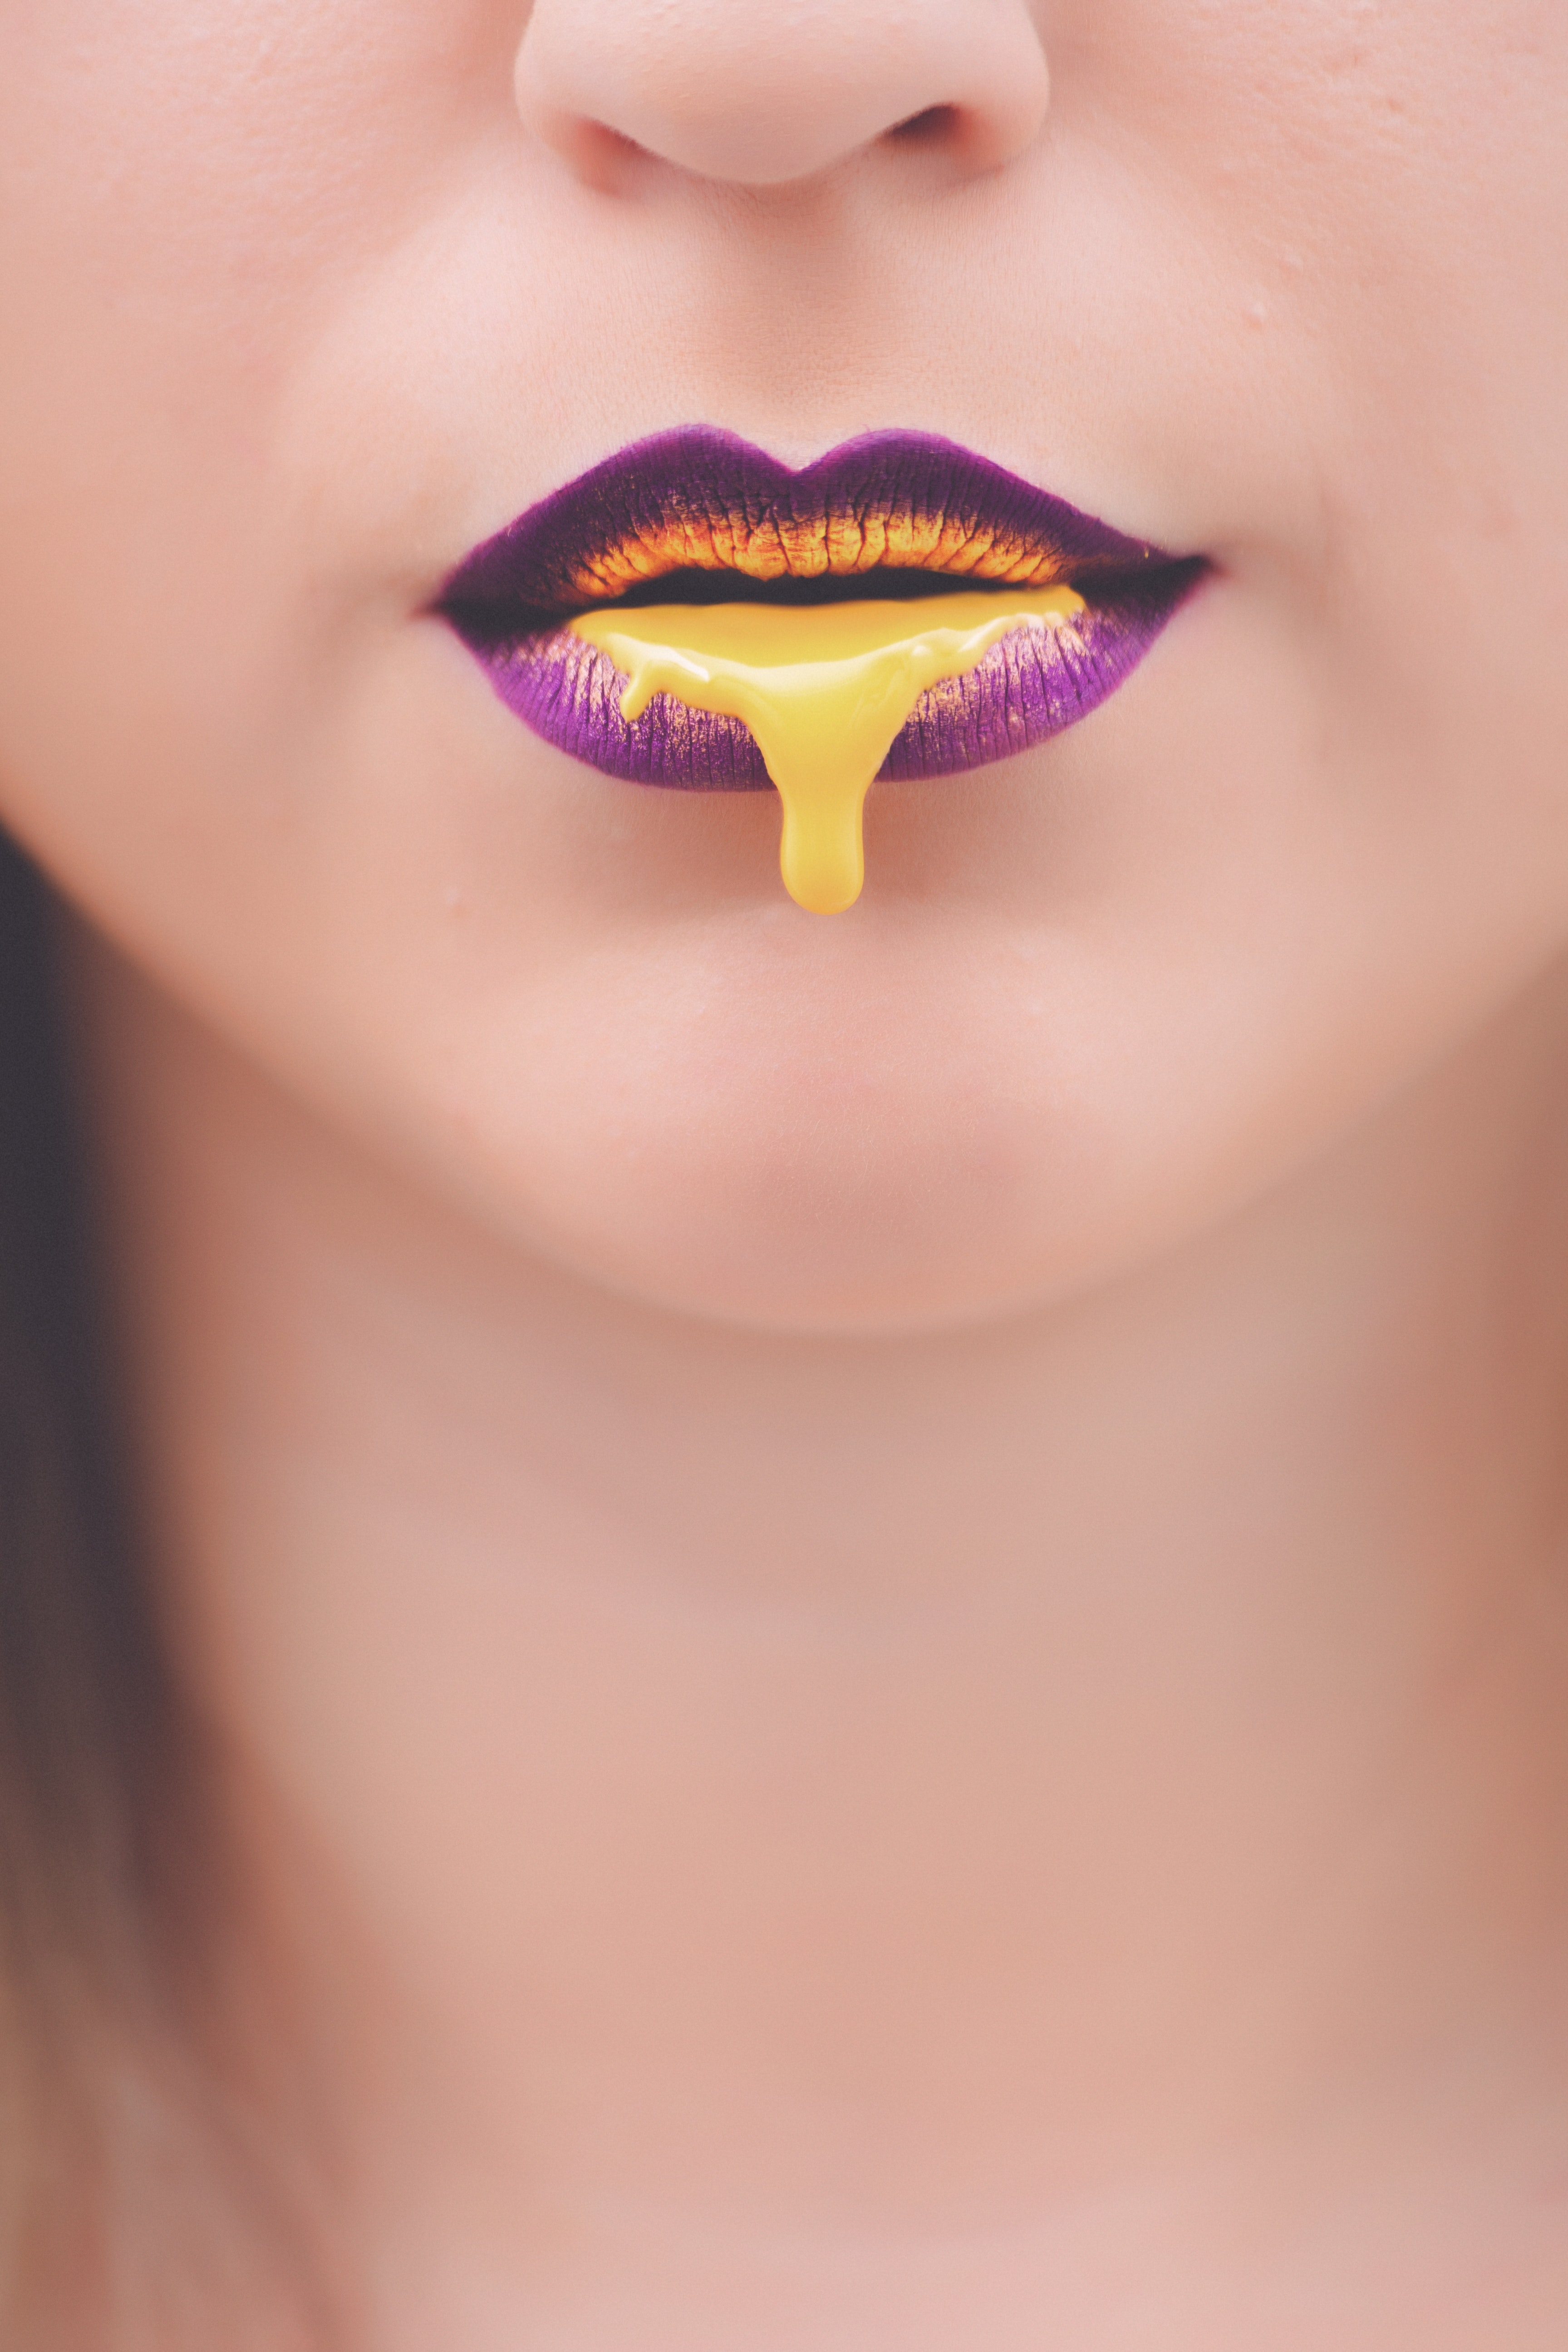 Yellow liquid on woman's lips photo